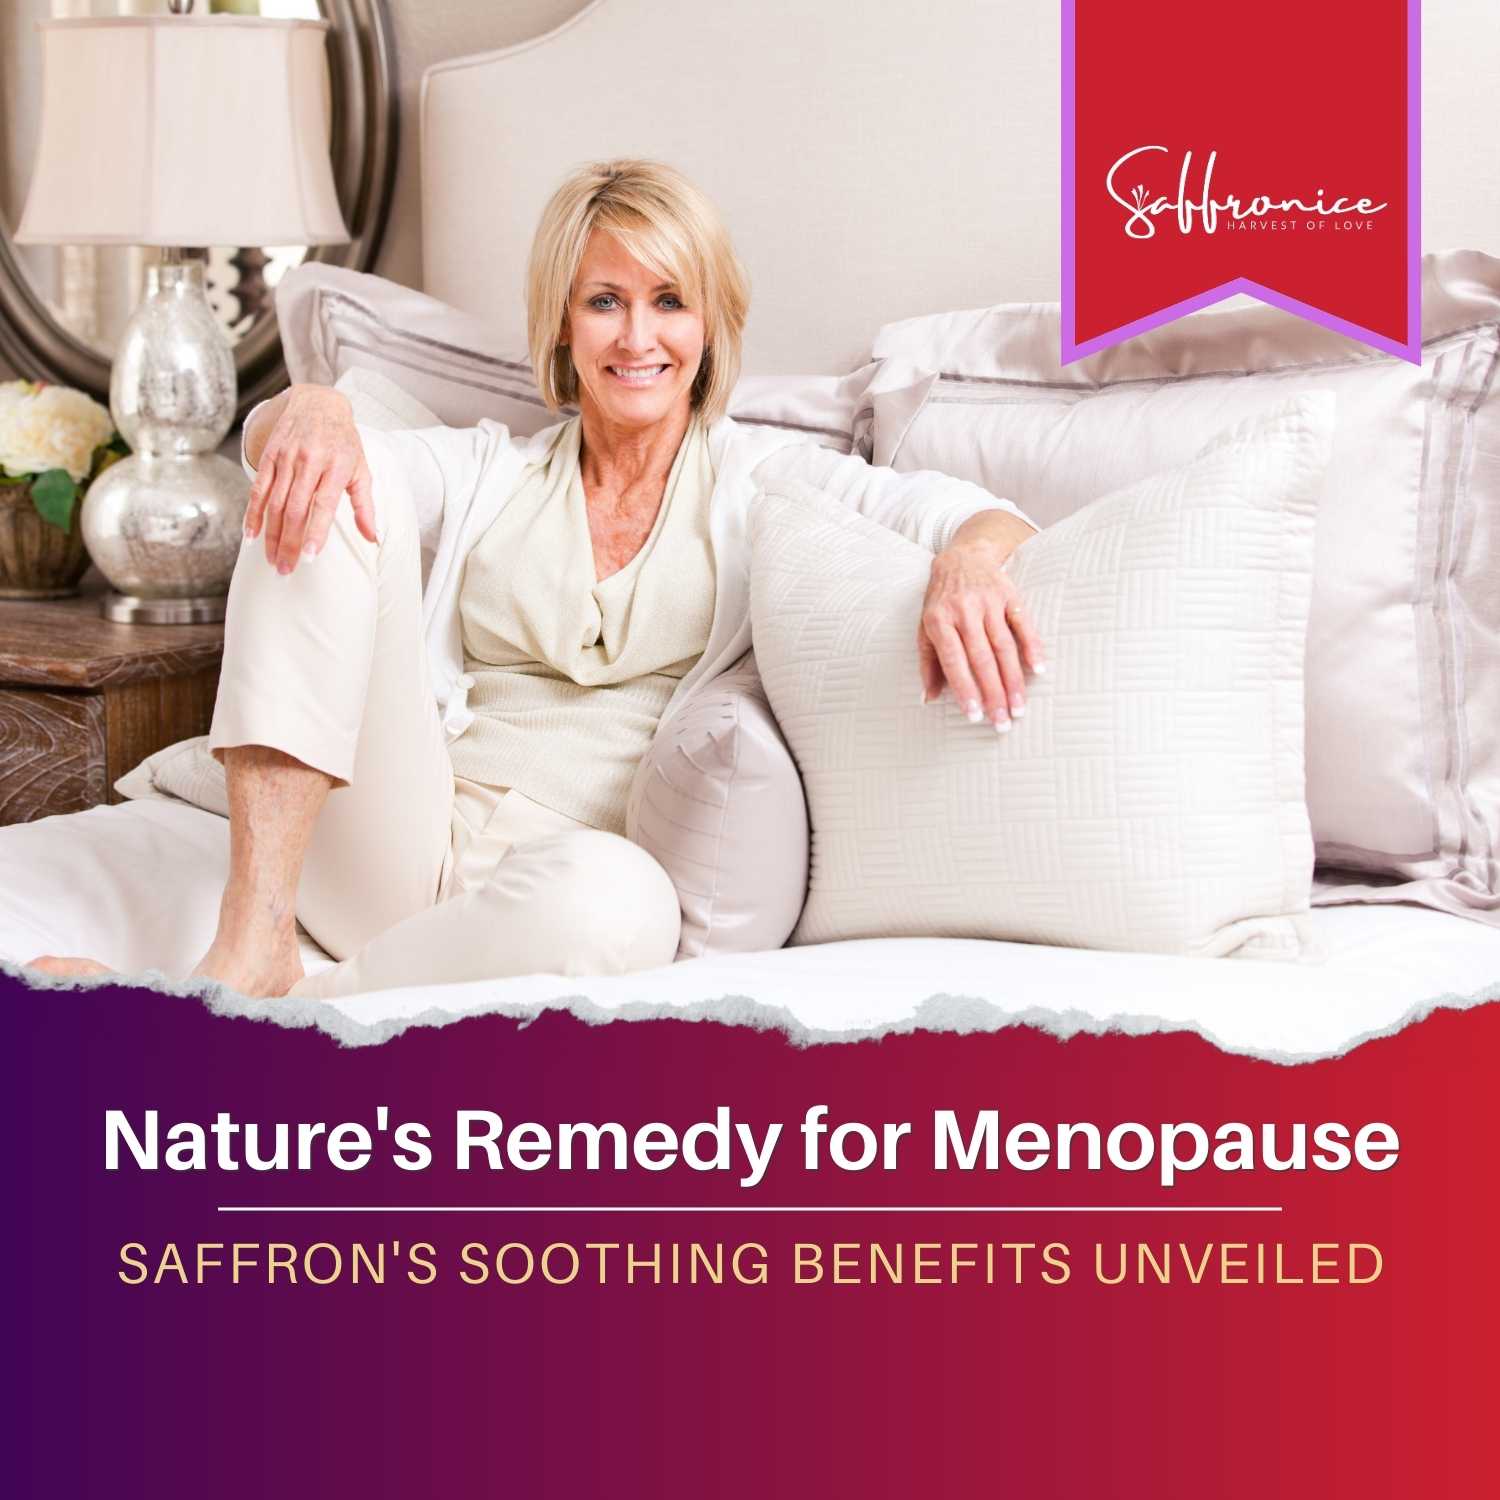 Saffron's Benefits for Menopause